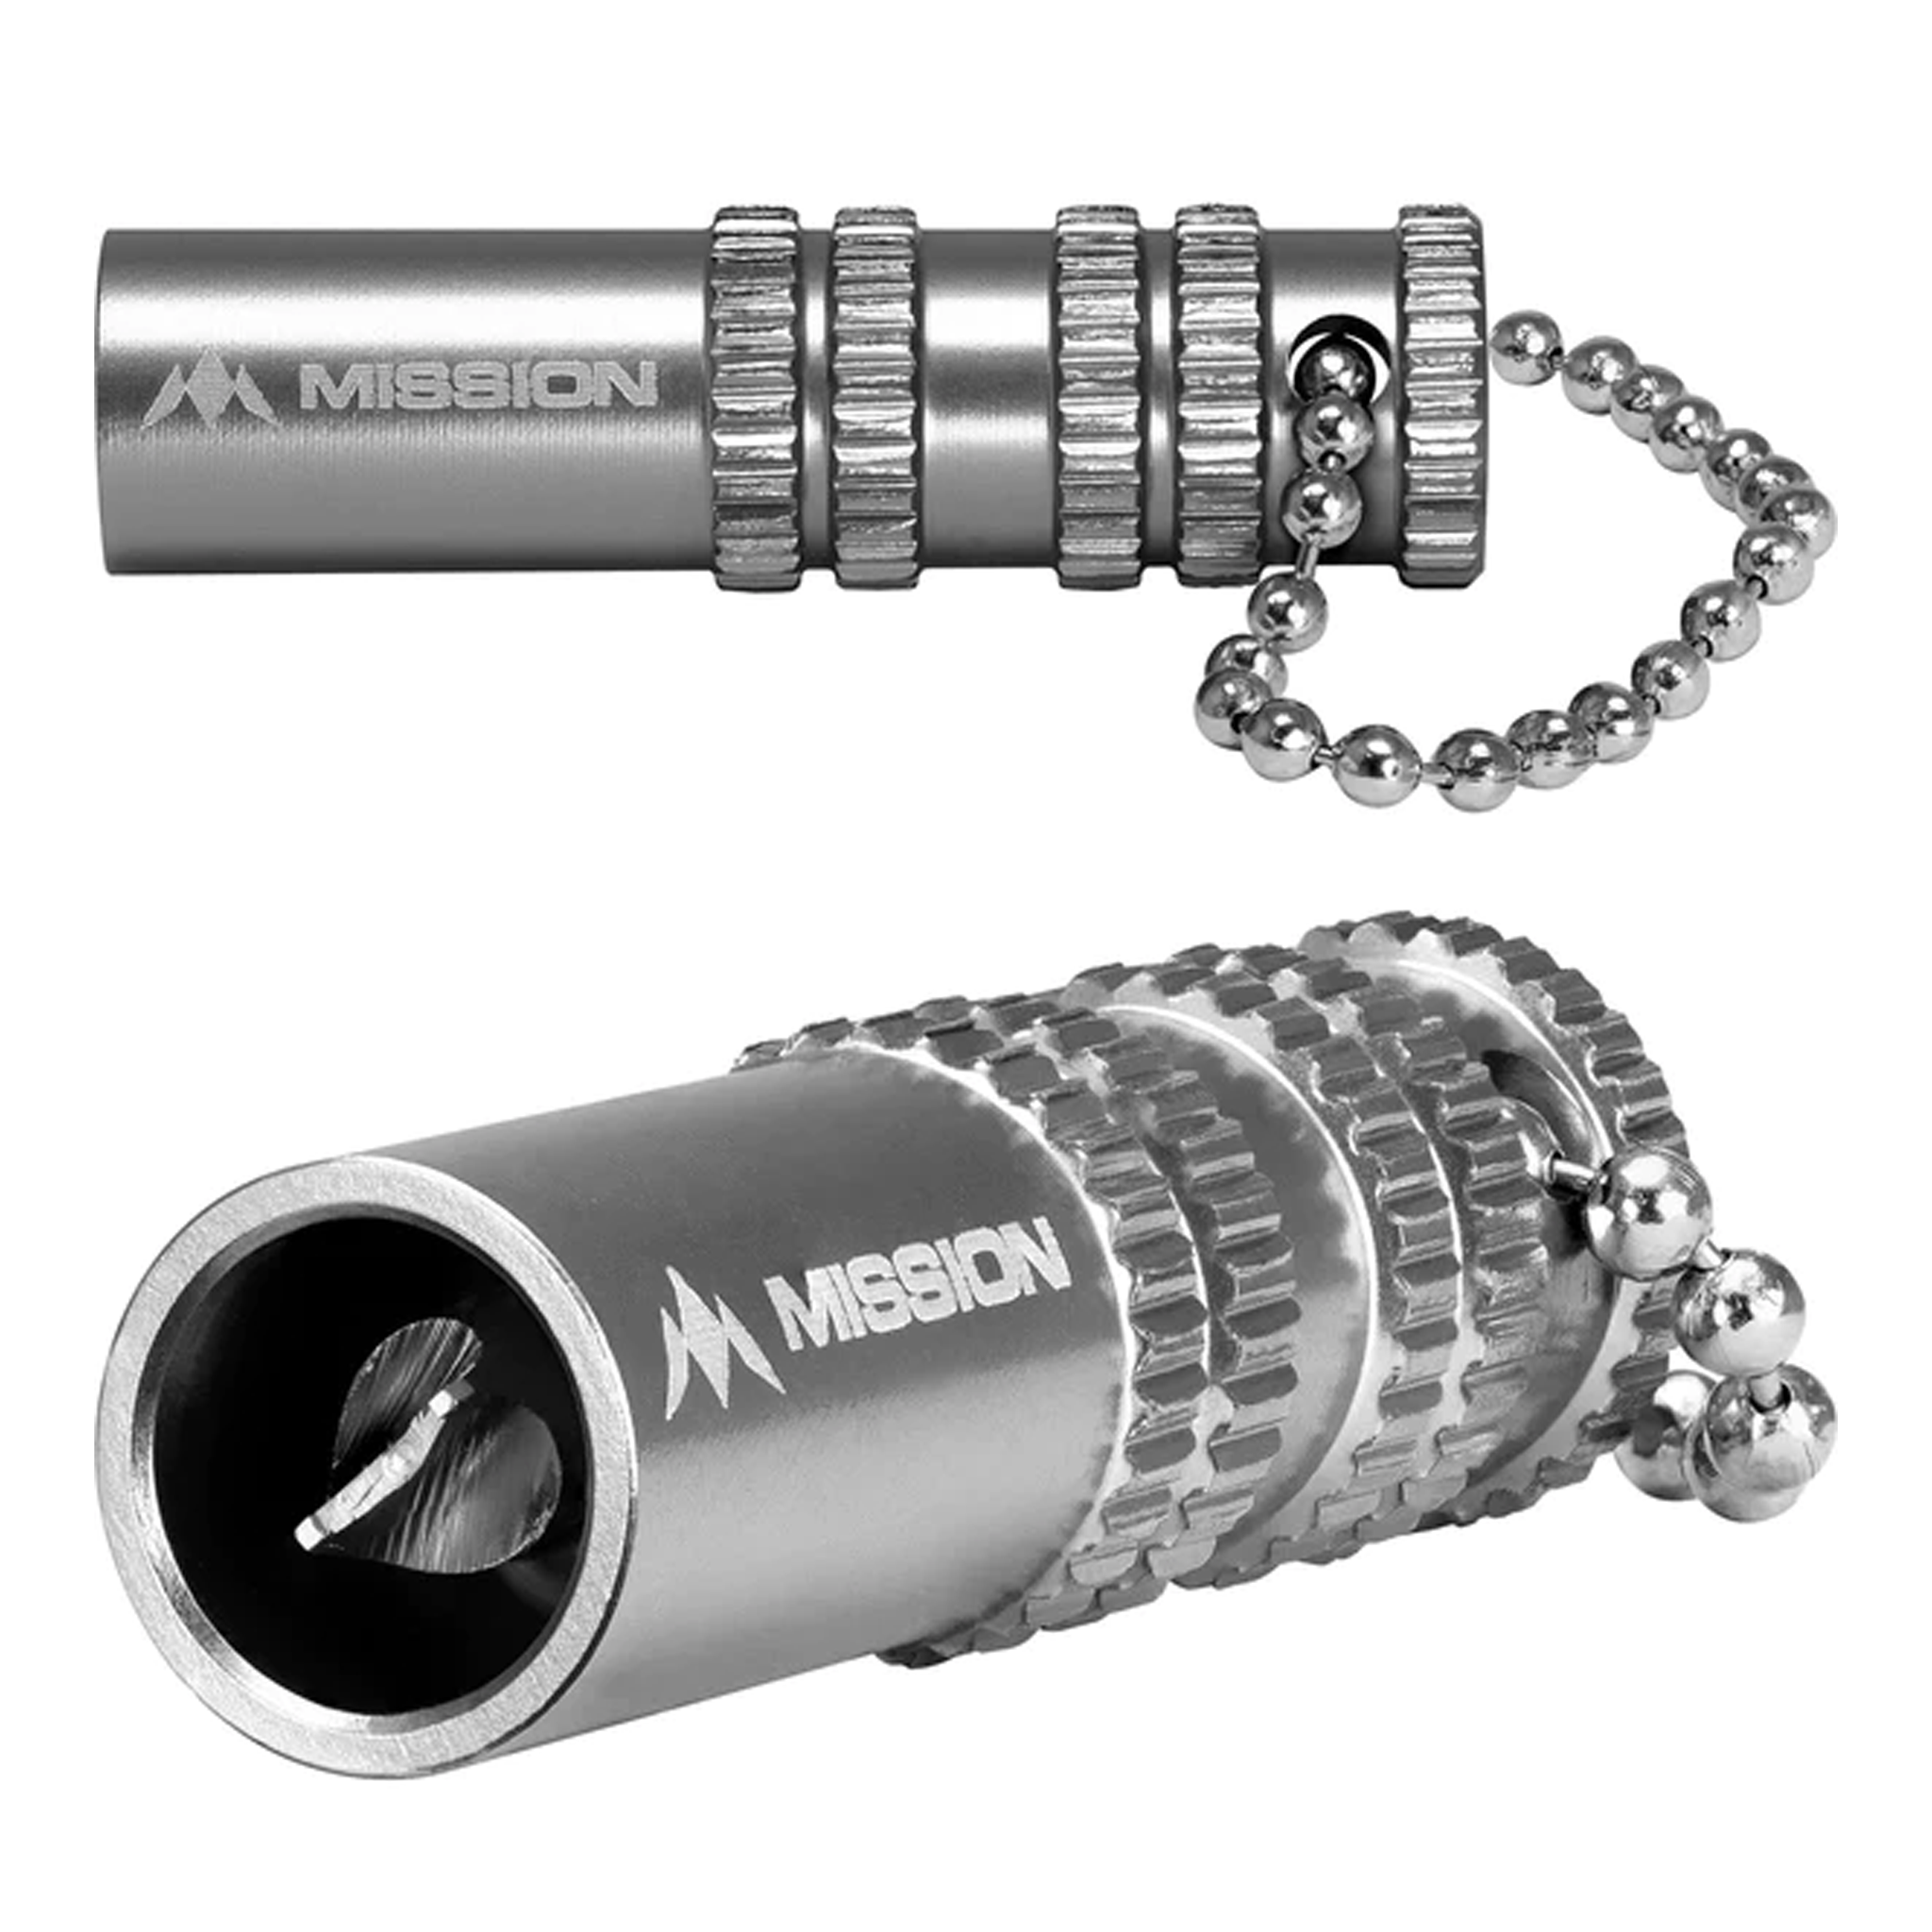 Mission Aluminium Broken Shaft Remover - Extractor Tool Silver Accessories